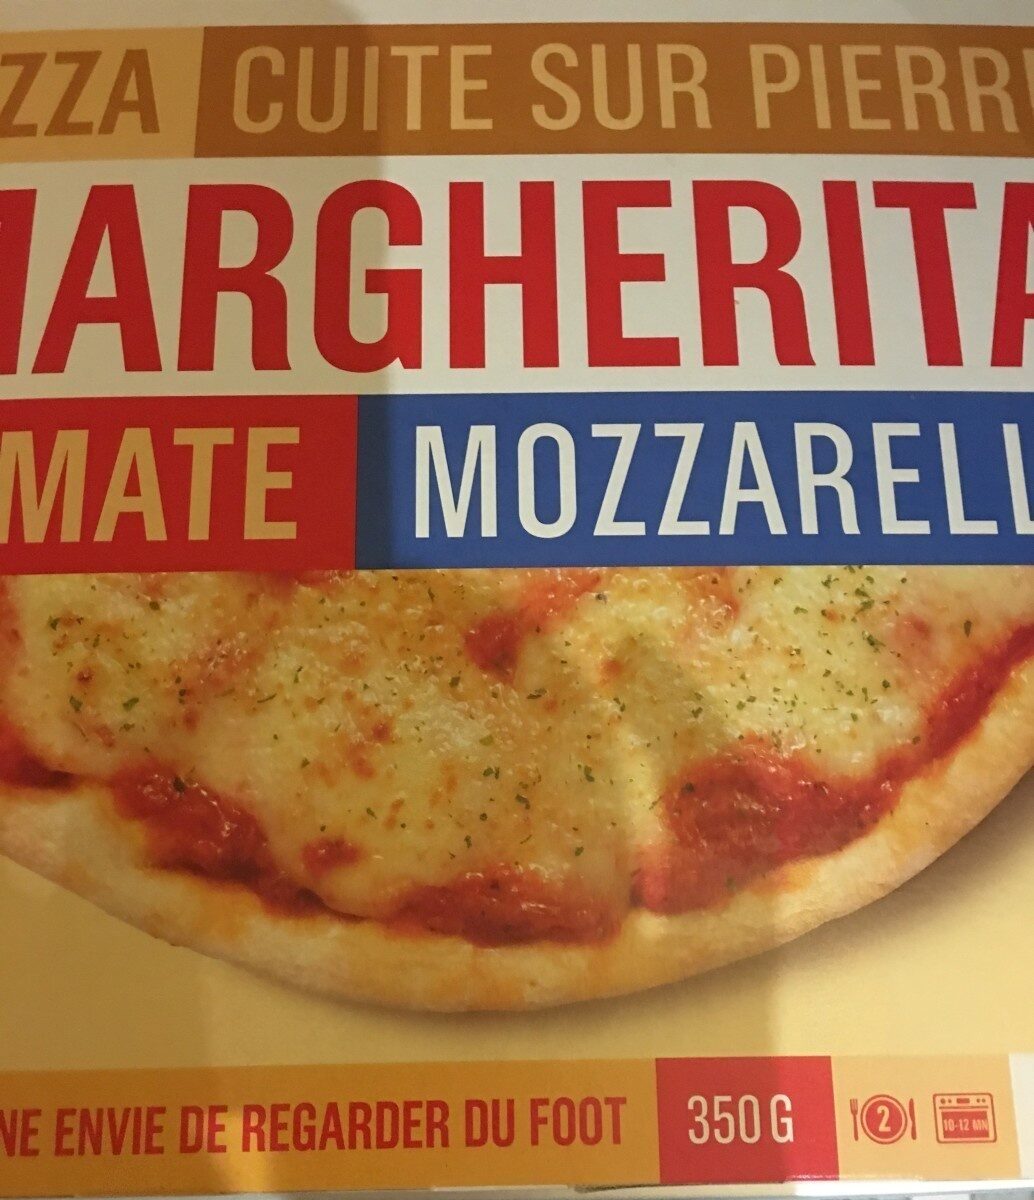 Pizza cuite sur pierre Margherita (Tomate, Mozzarella) - Producto - fr